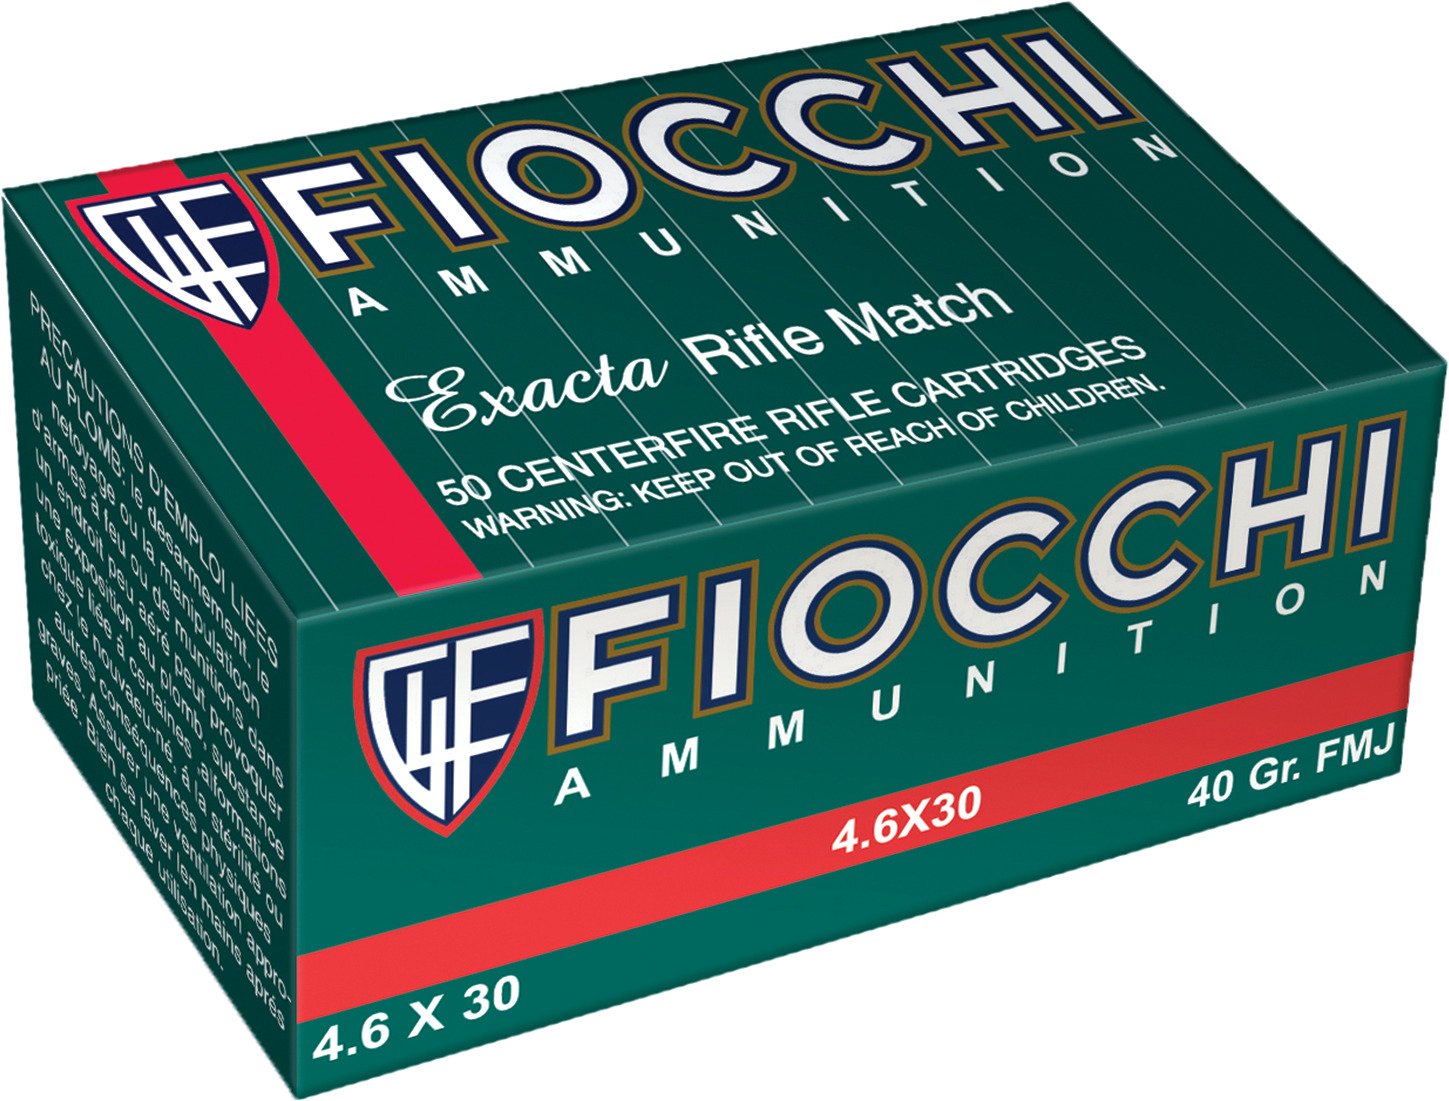 Fiocchi 4.6 x 30mm Heckler & Koch 40-Grain Centerfire Rifle Ammunition